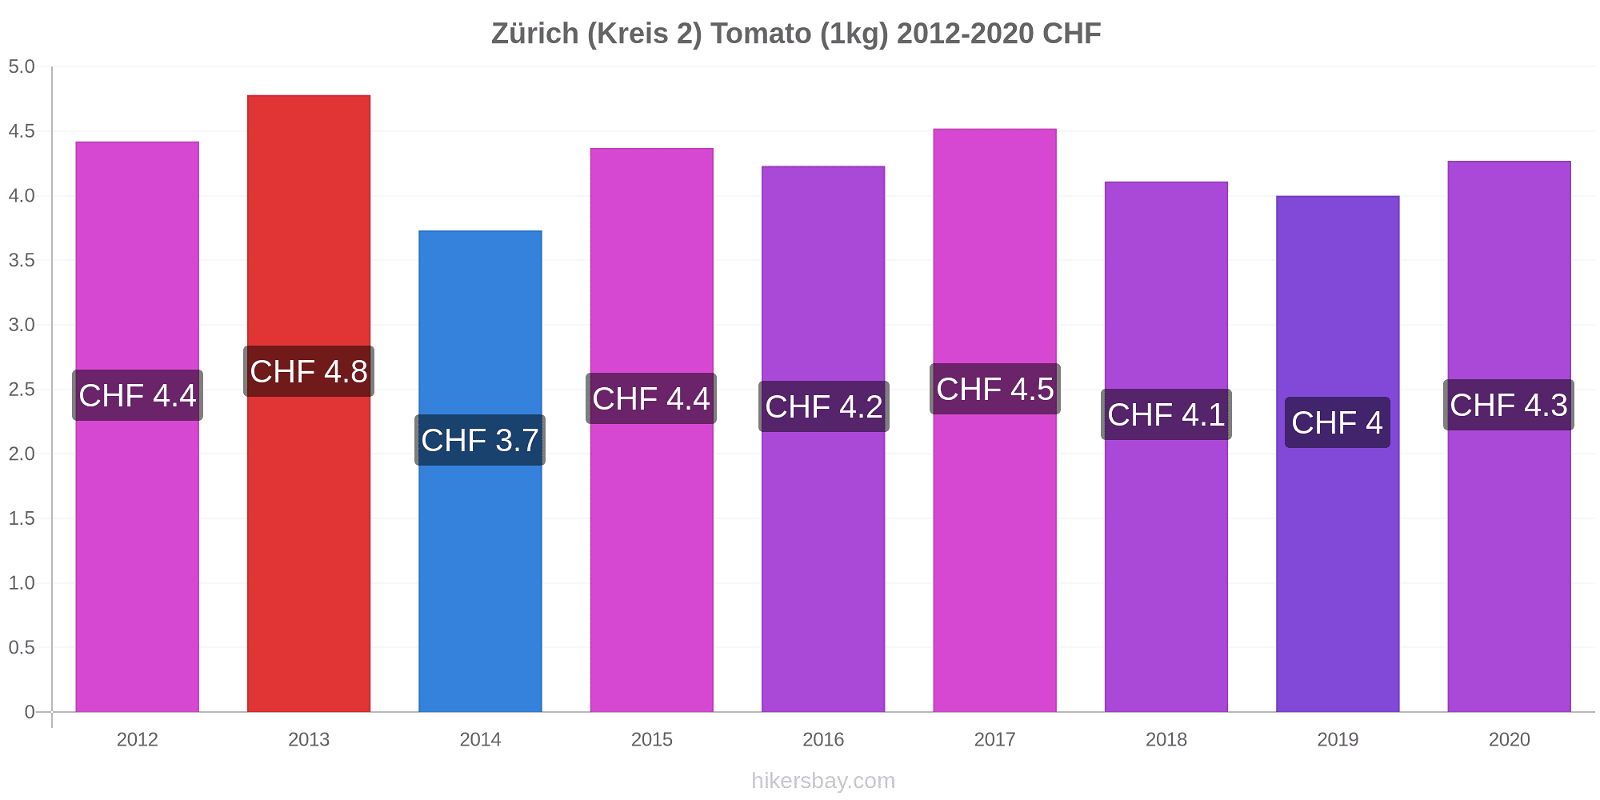 Zürich (Kreis 2) price changes Tomato (1kg) hikersbay.com